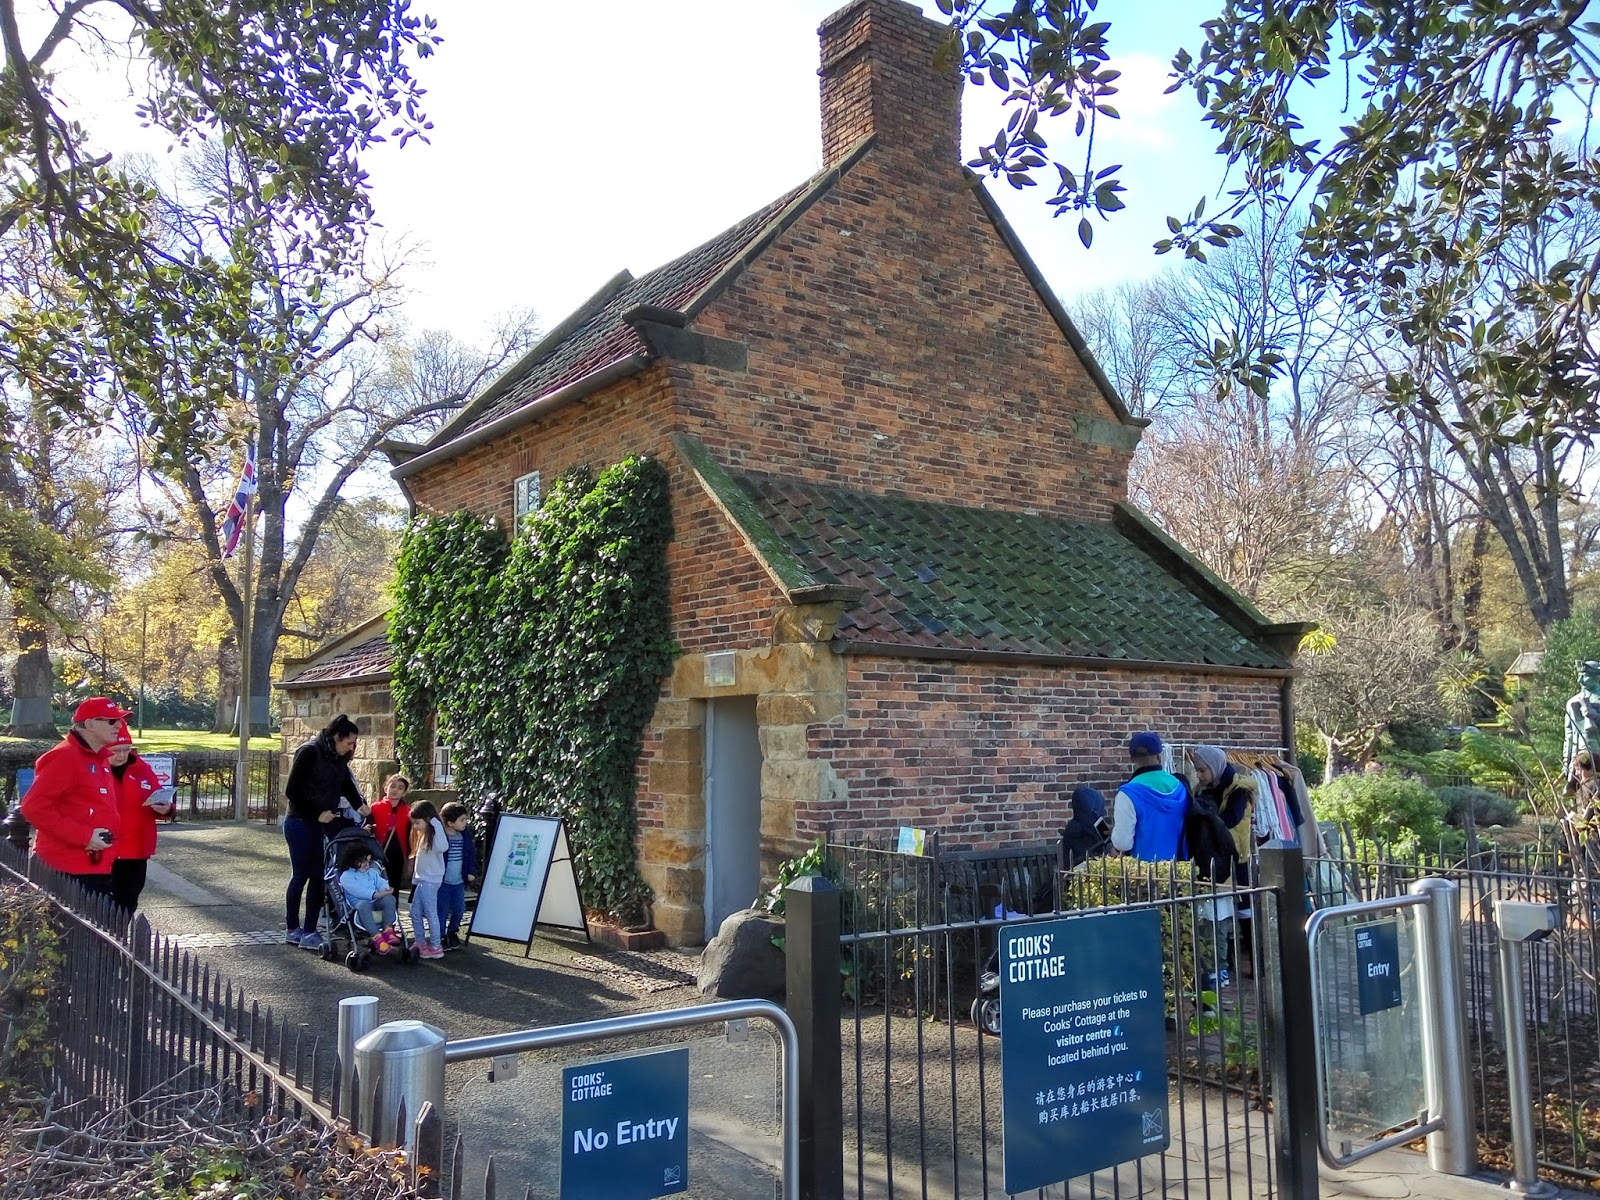 Captain Cook S Cottage And Fitzroy Gardens Melbourne Australia